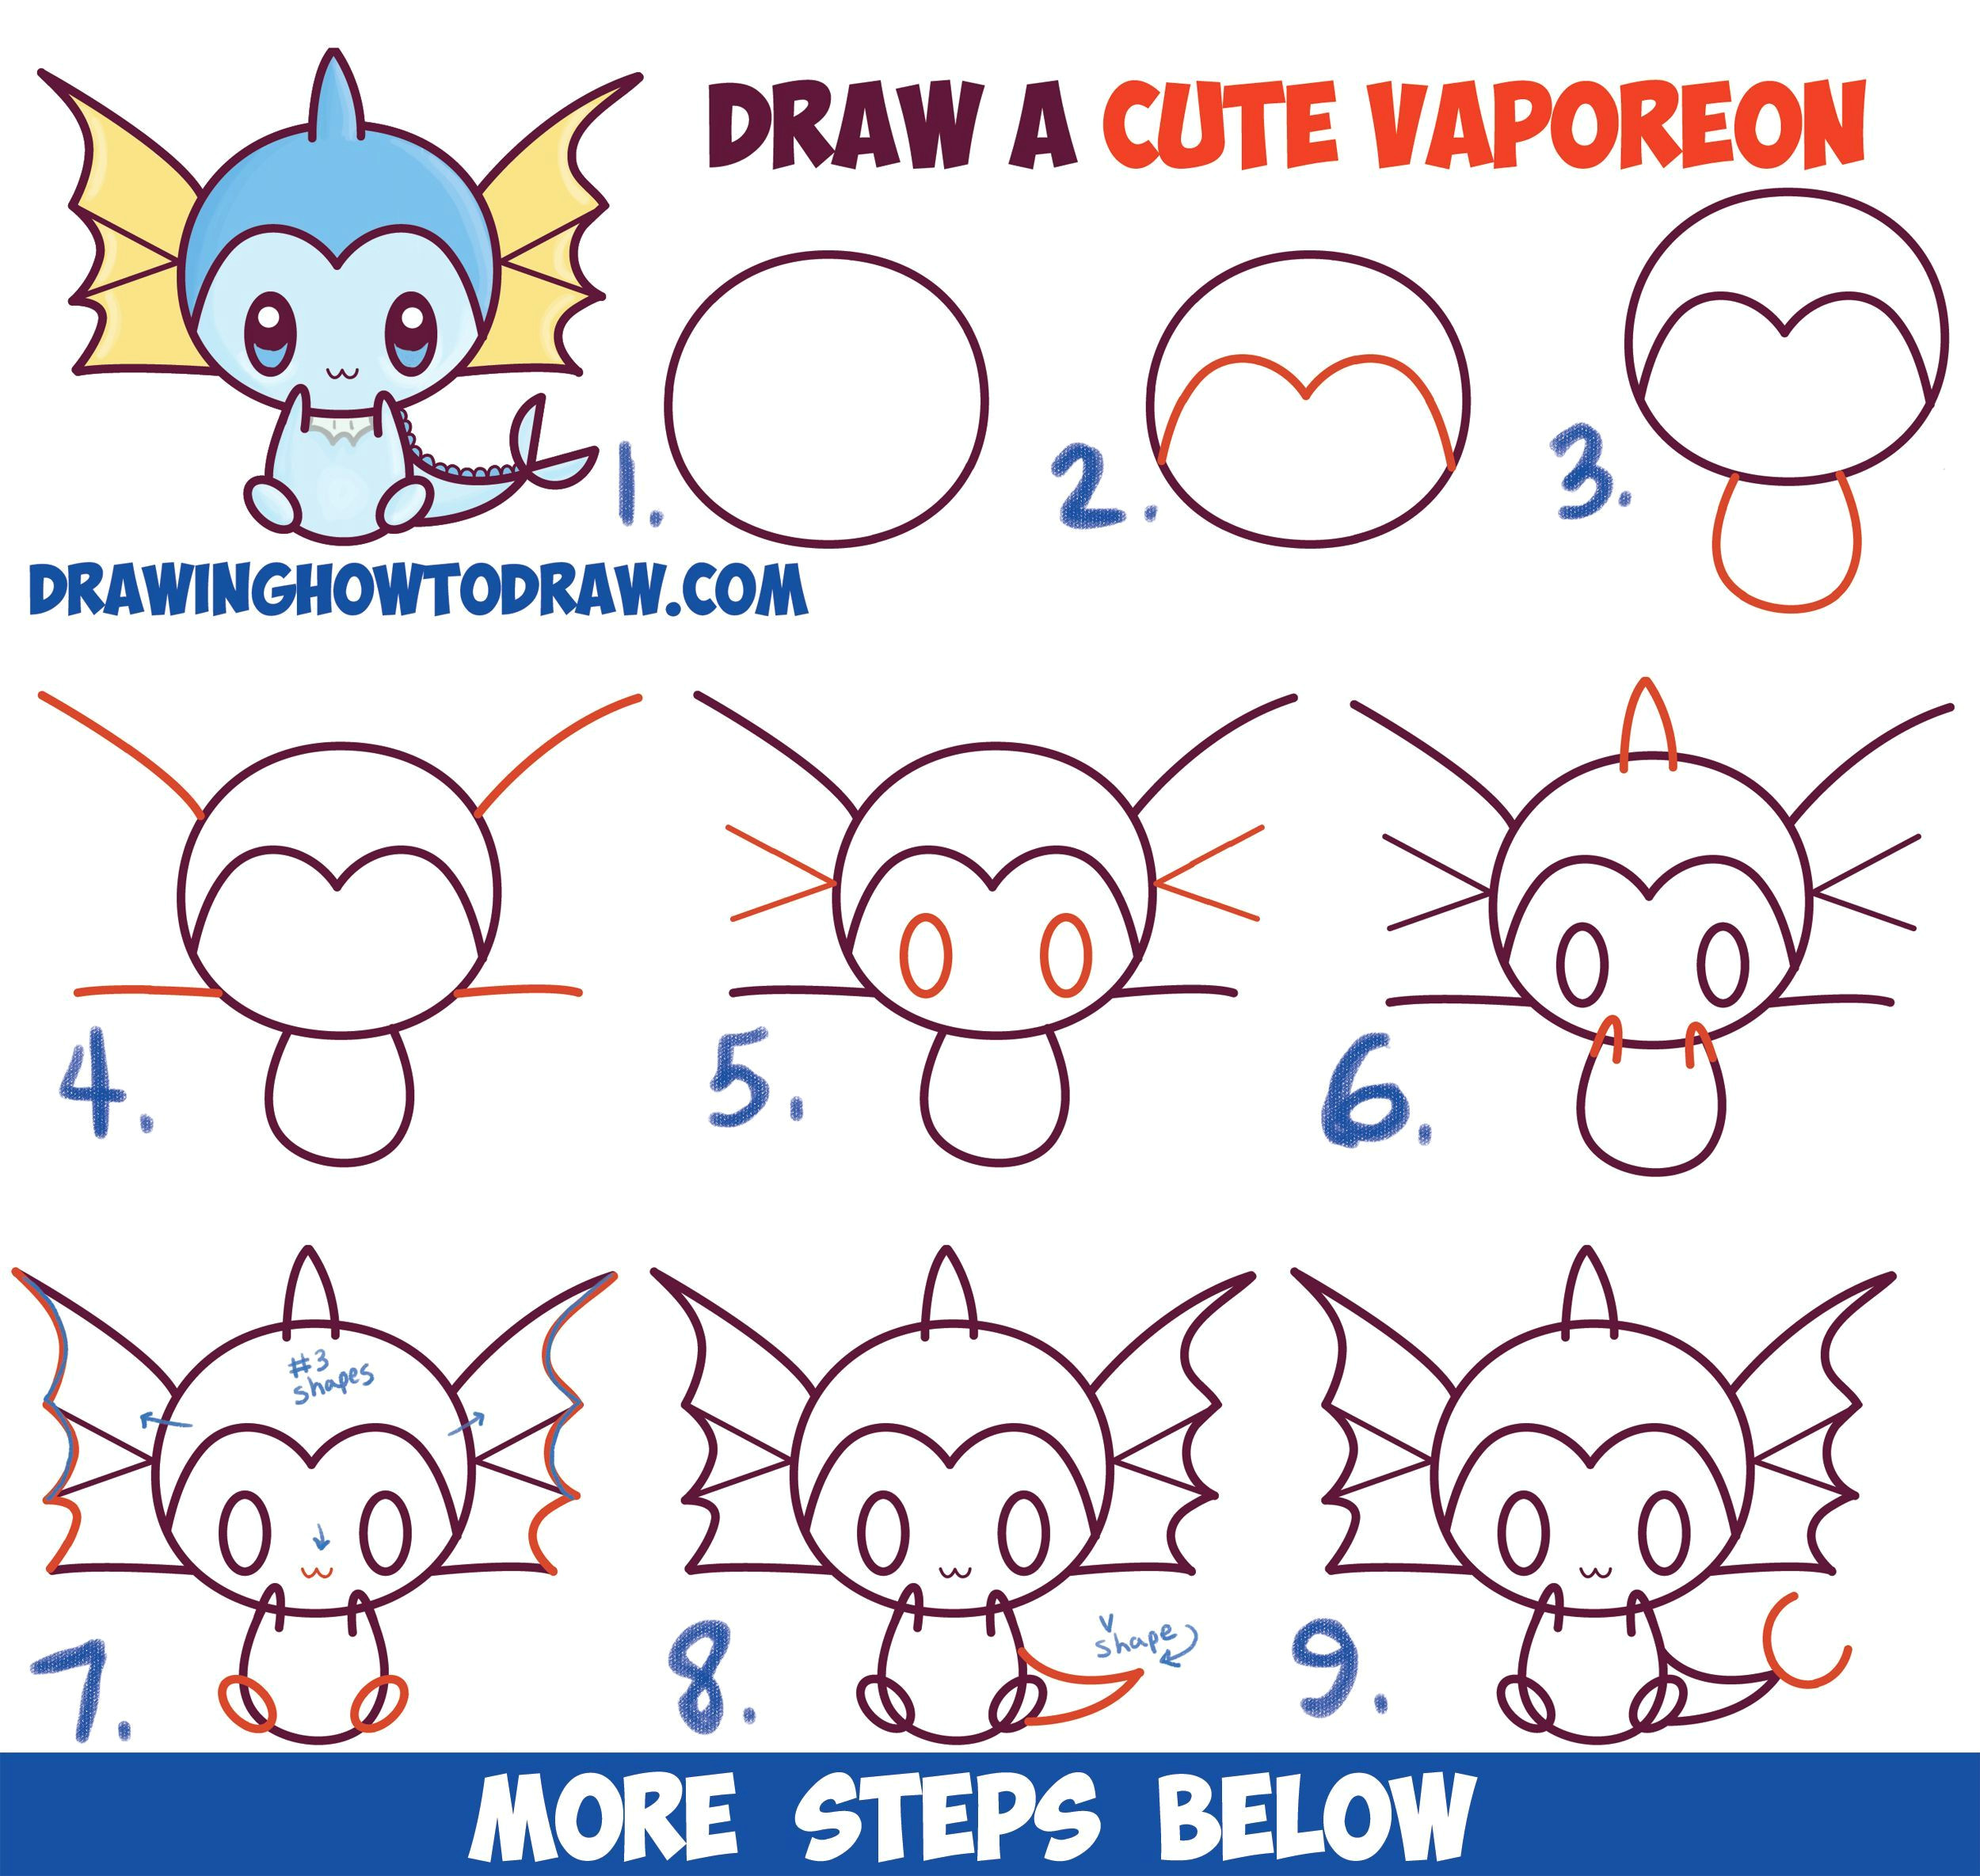 Cute Kawaii Drawings Easy How to Draw Cute Kawaii Chibi Vaporeon From Pokemon Easy